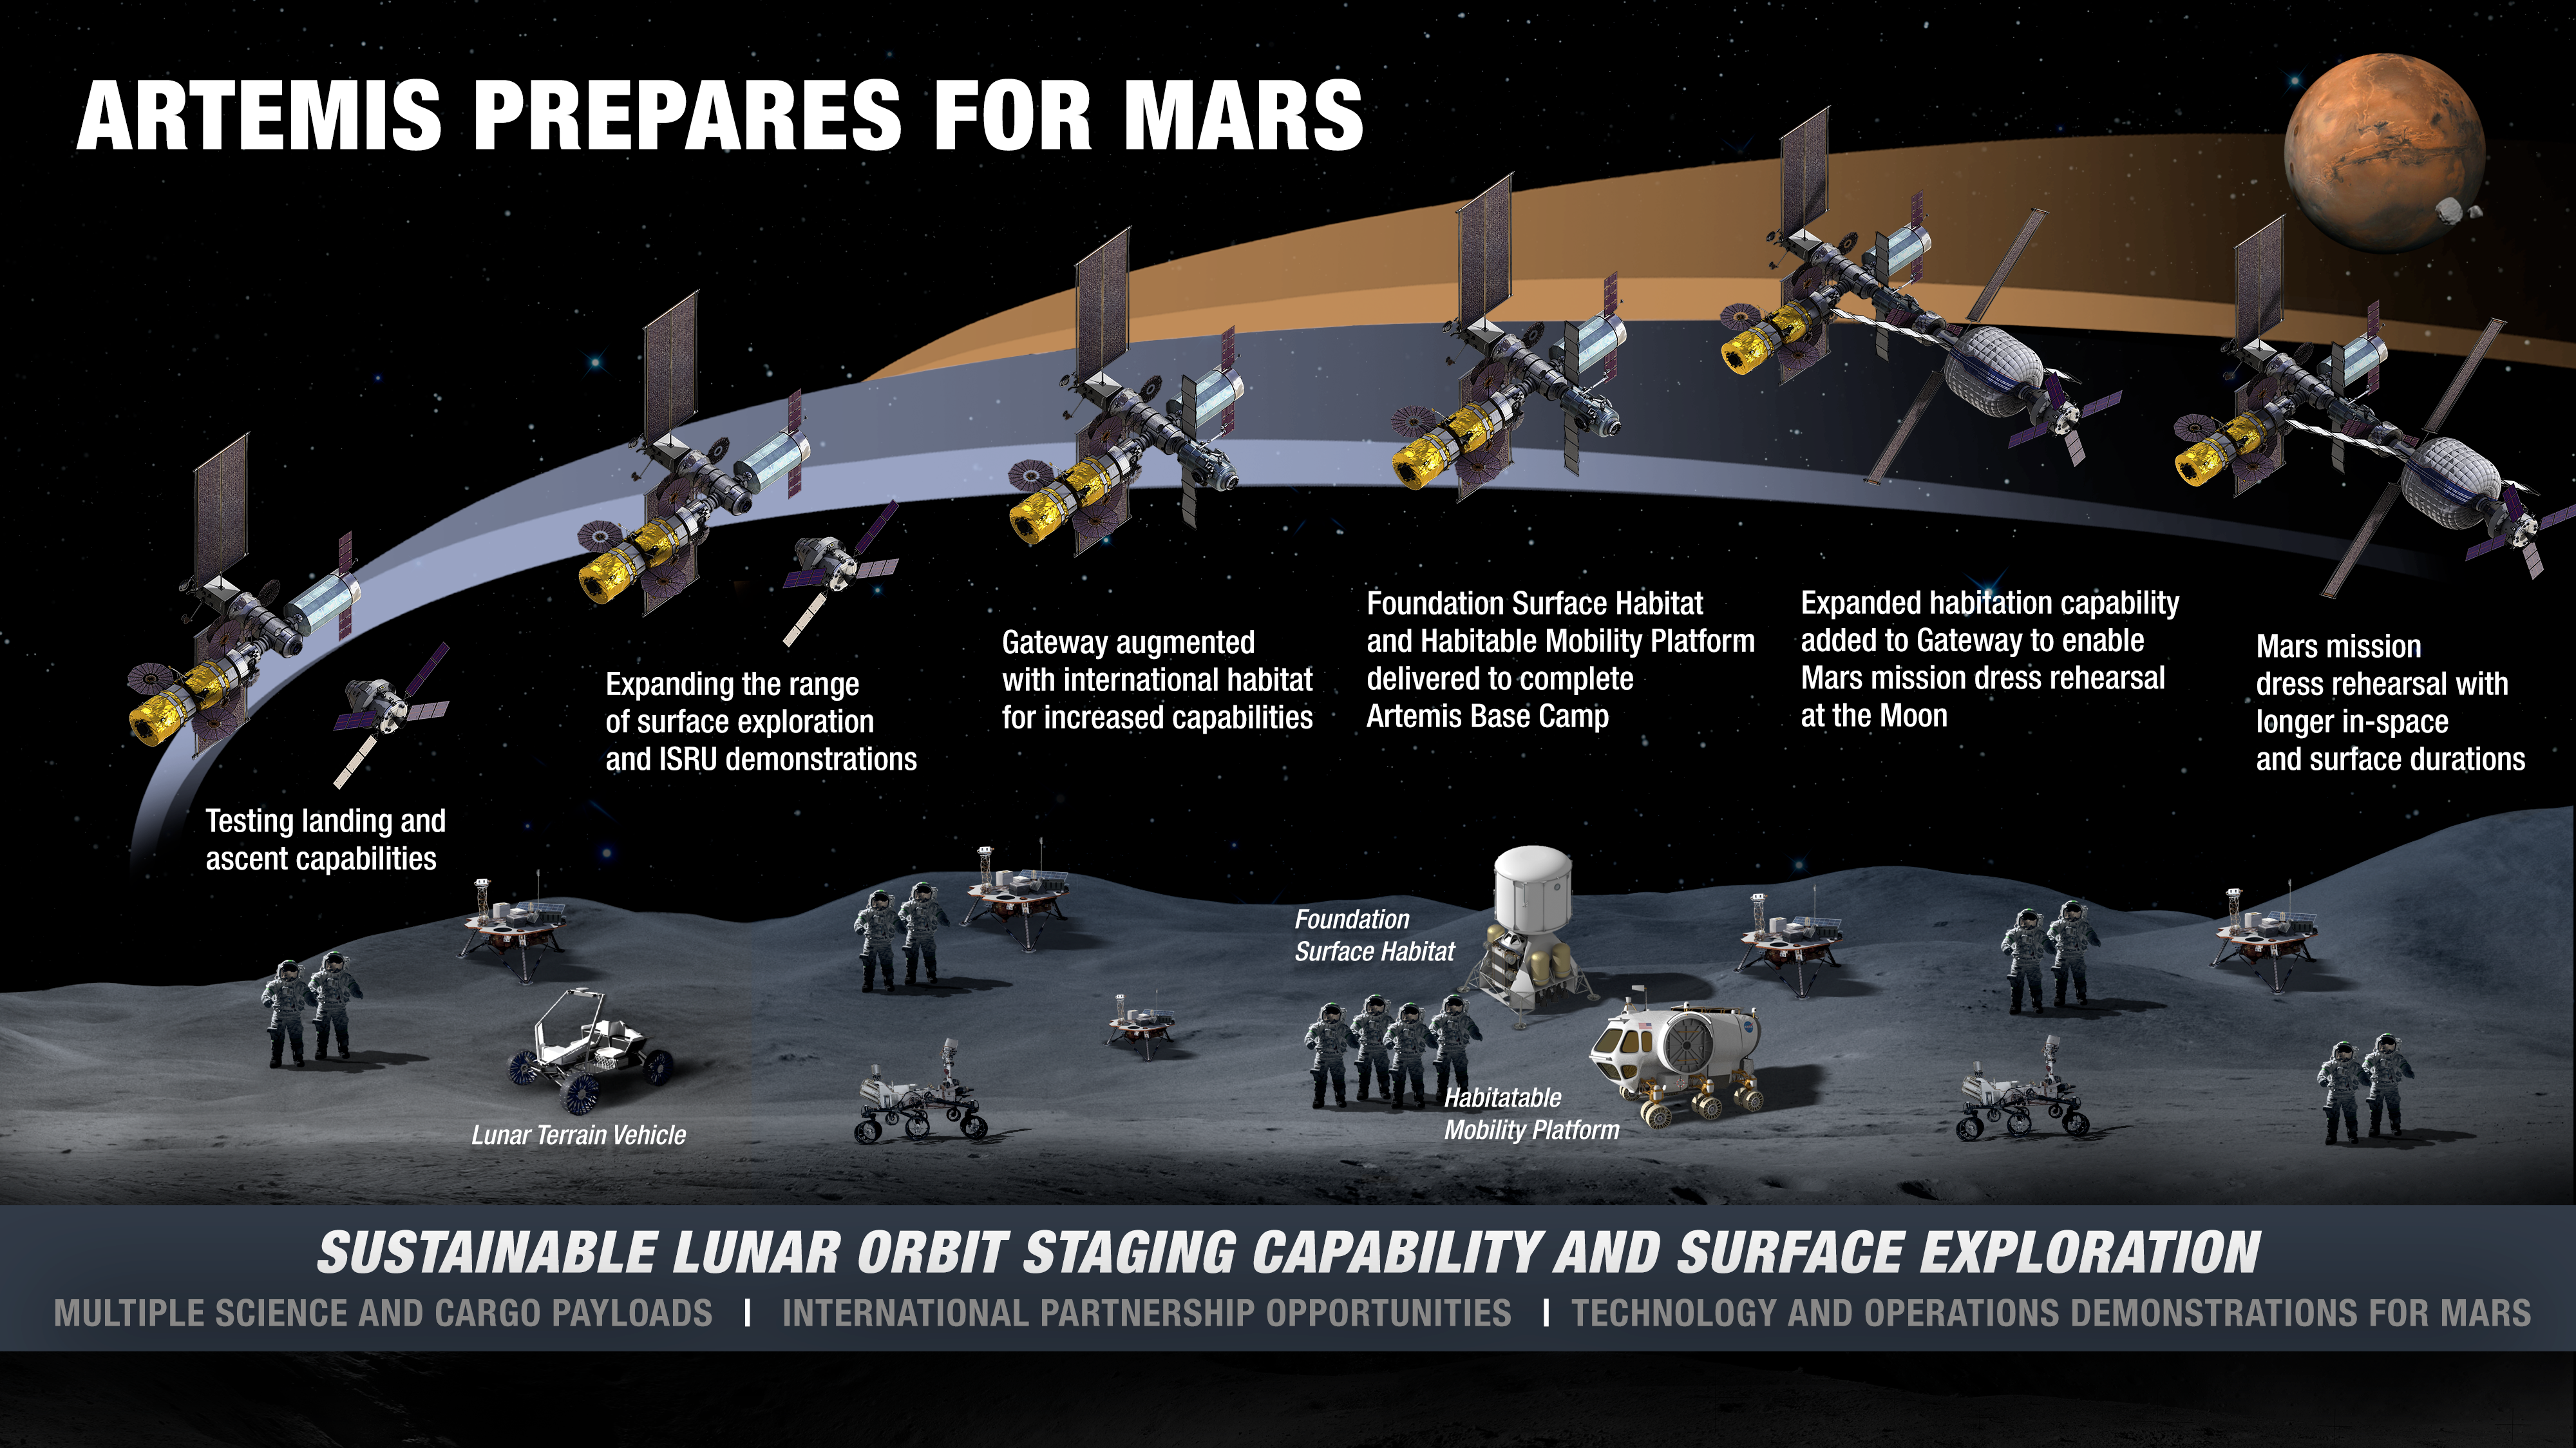 https://upload.wikimedia.org/wikipedia/commons/8/8f/NASA_Moon_to_Mars_2020.png